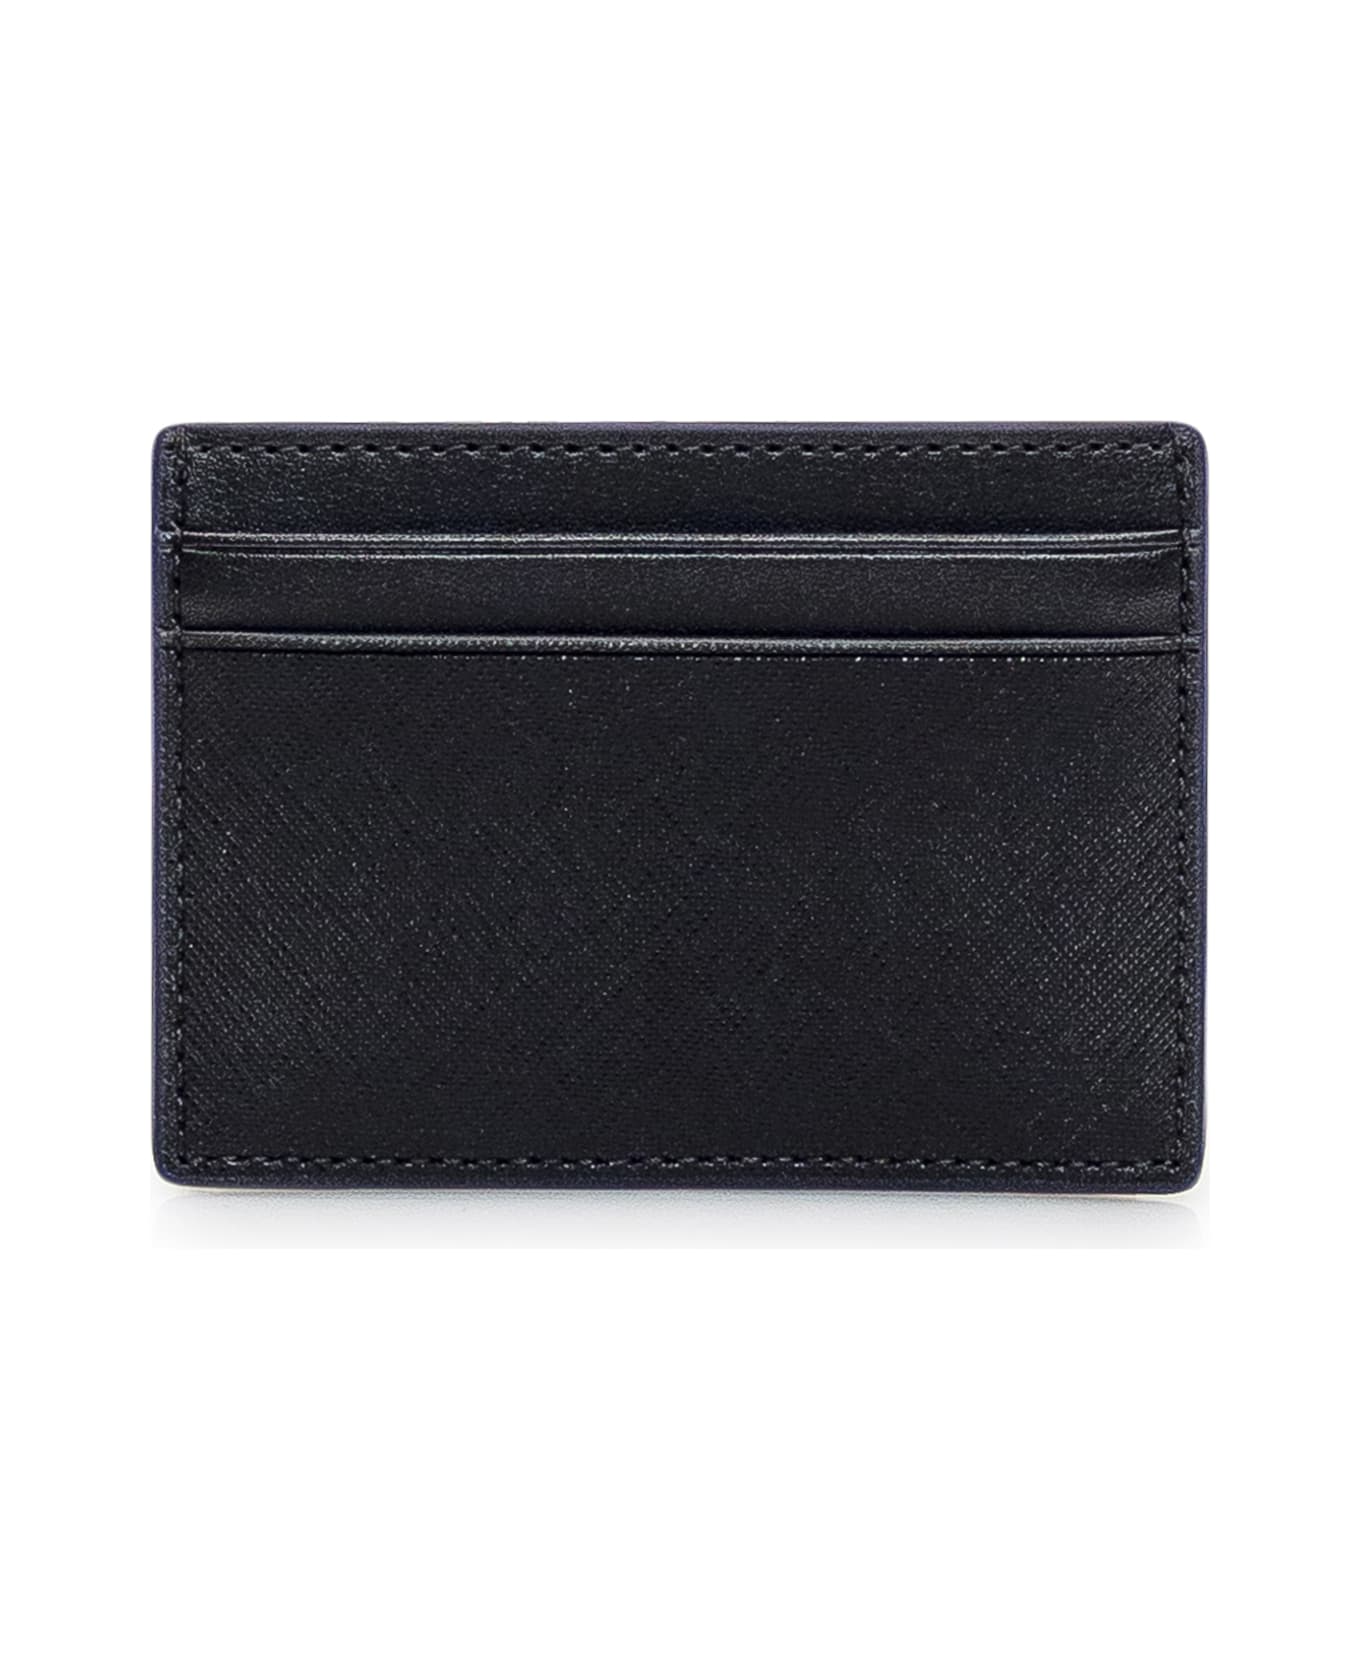 Bally Leather Card Holder - BLACK